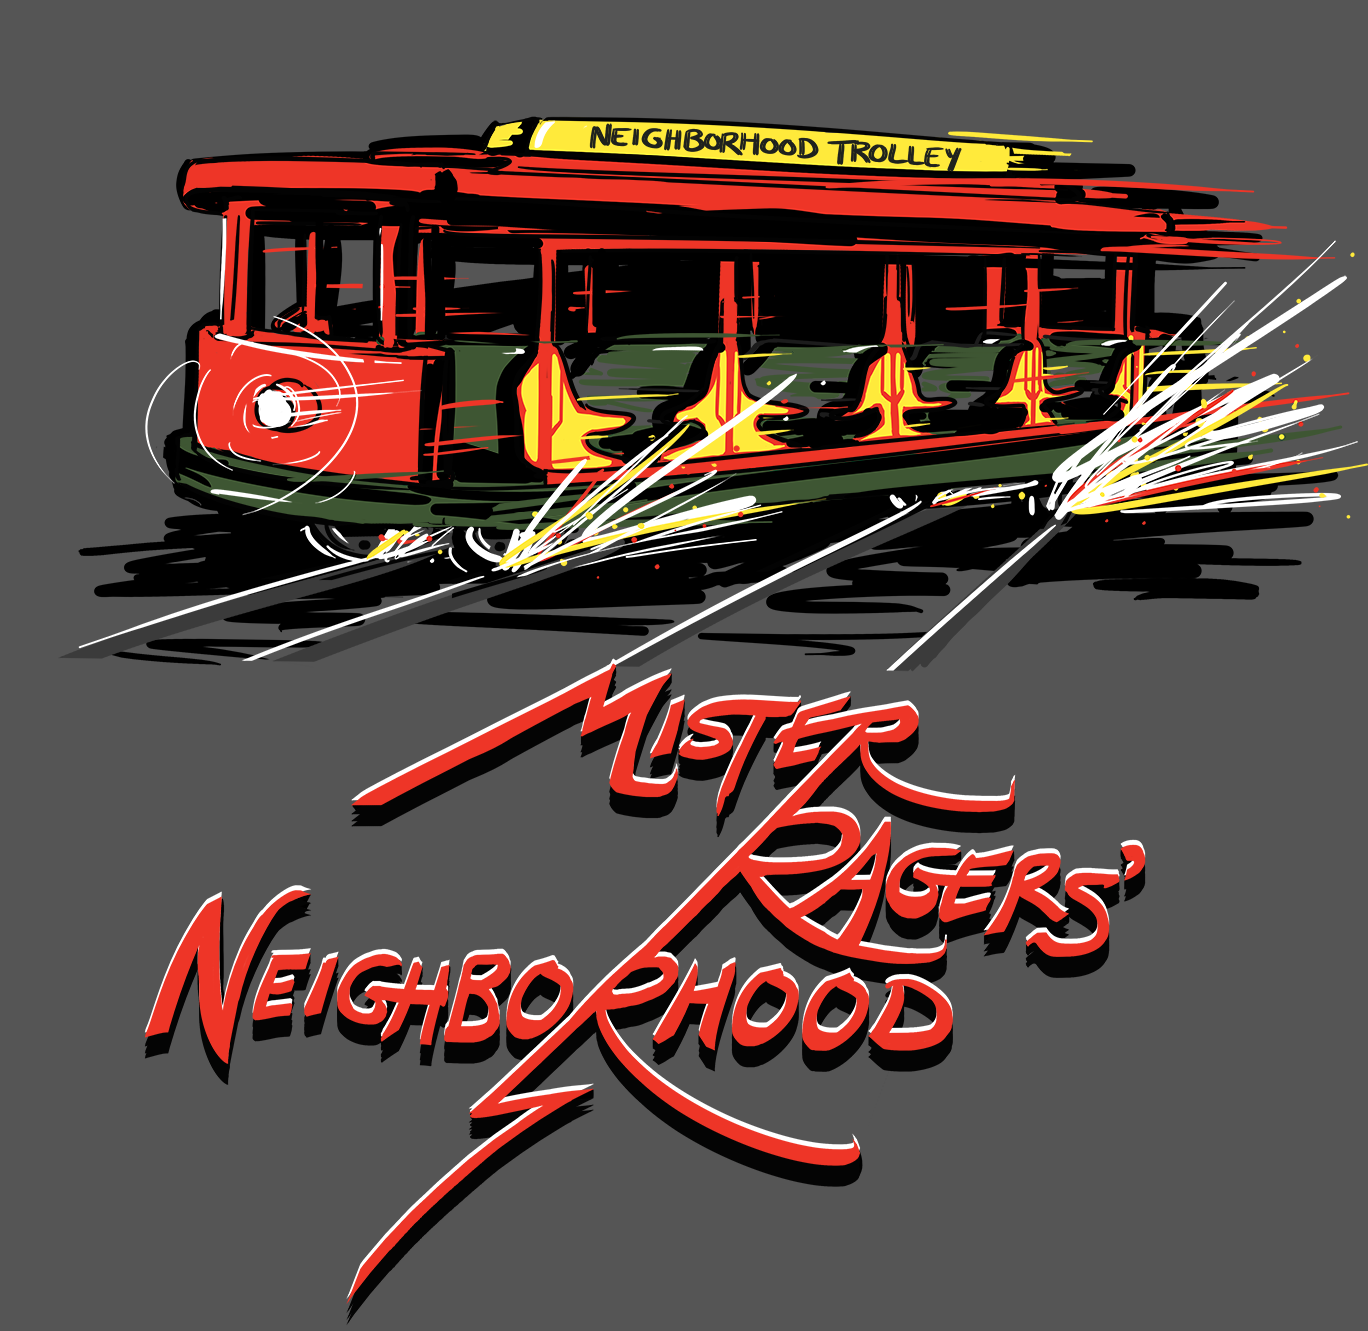 The trolley from Mr. Rogers' Neighborhood multi-track drifting, with 'Mr. Ragers' Neighborhood' written in metal script below